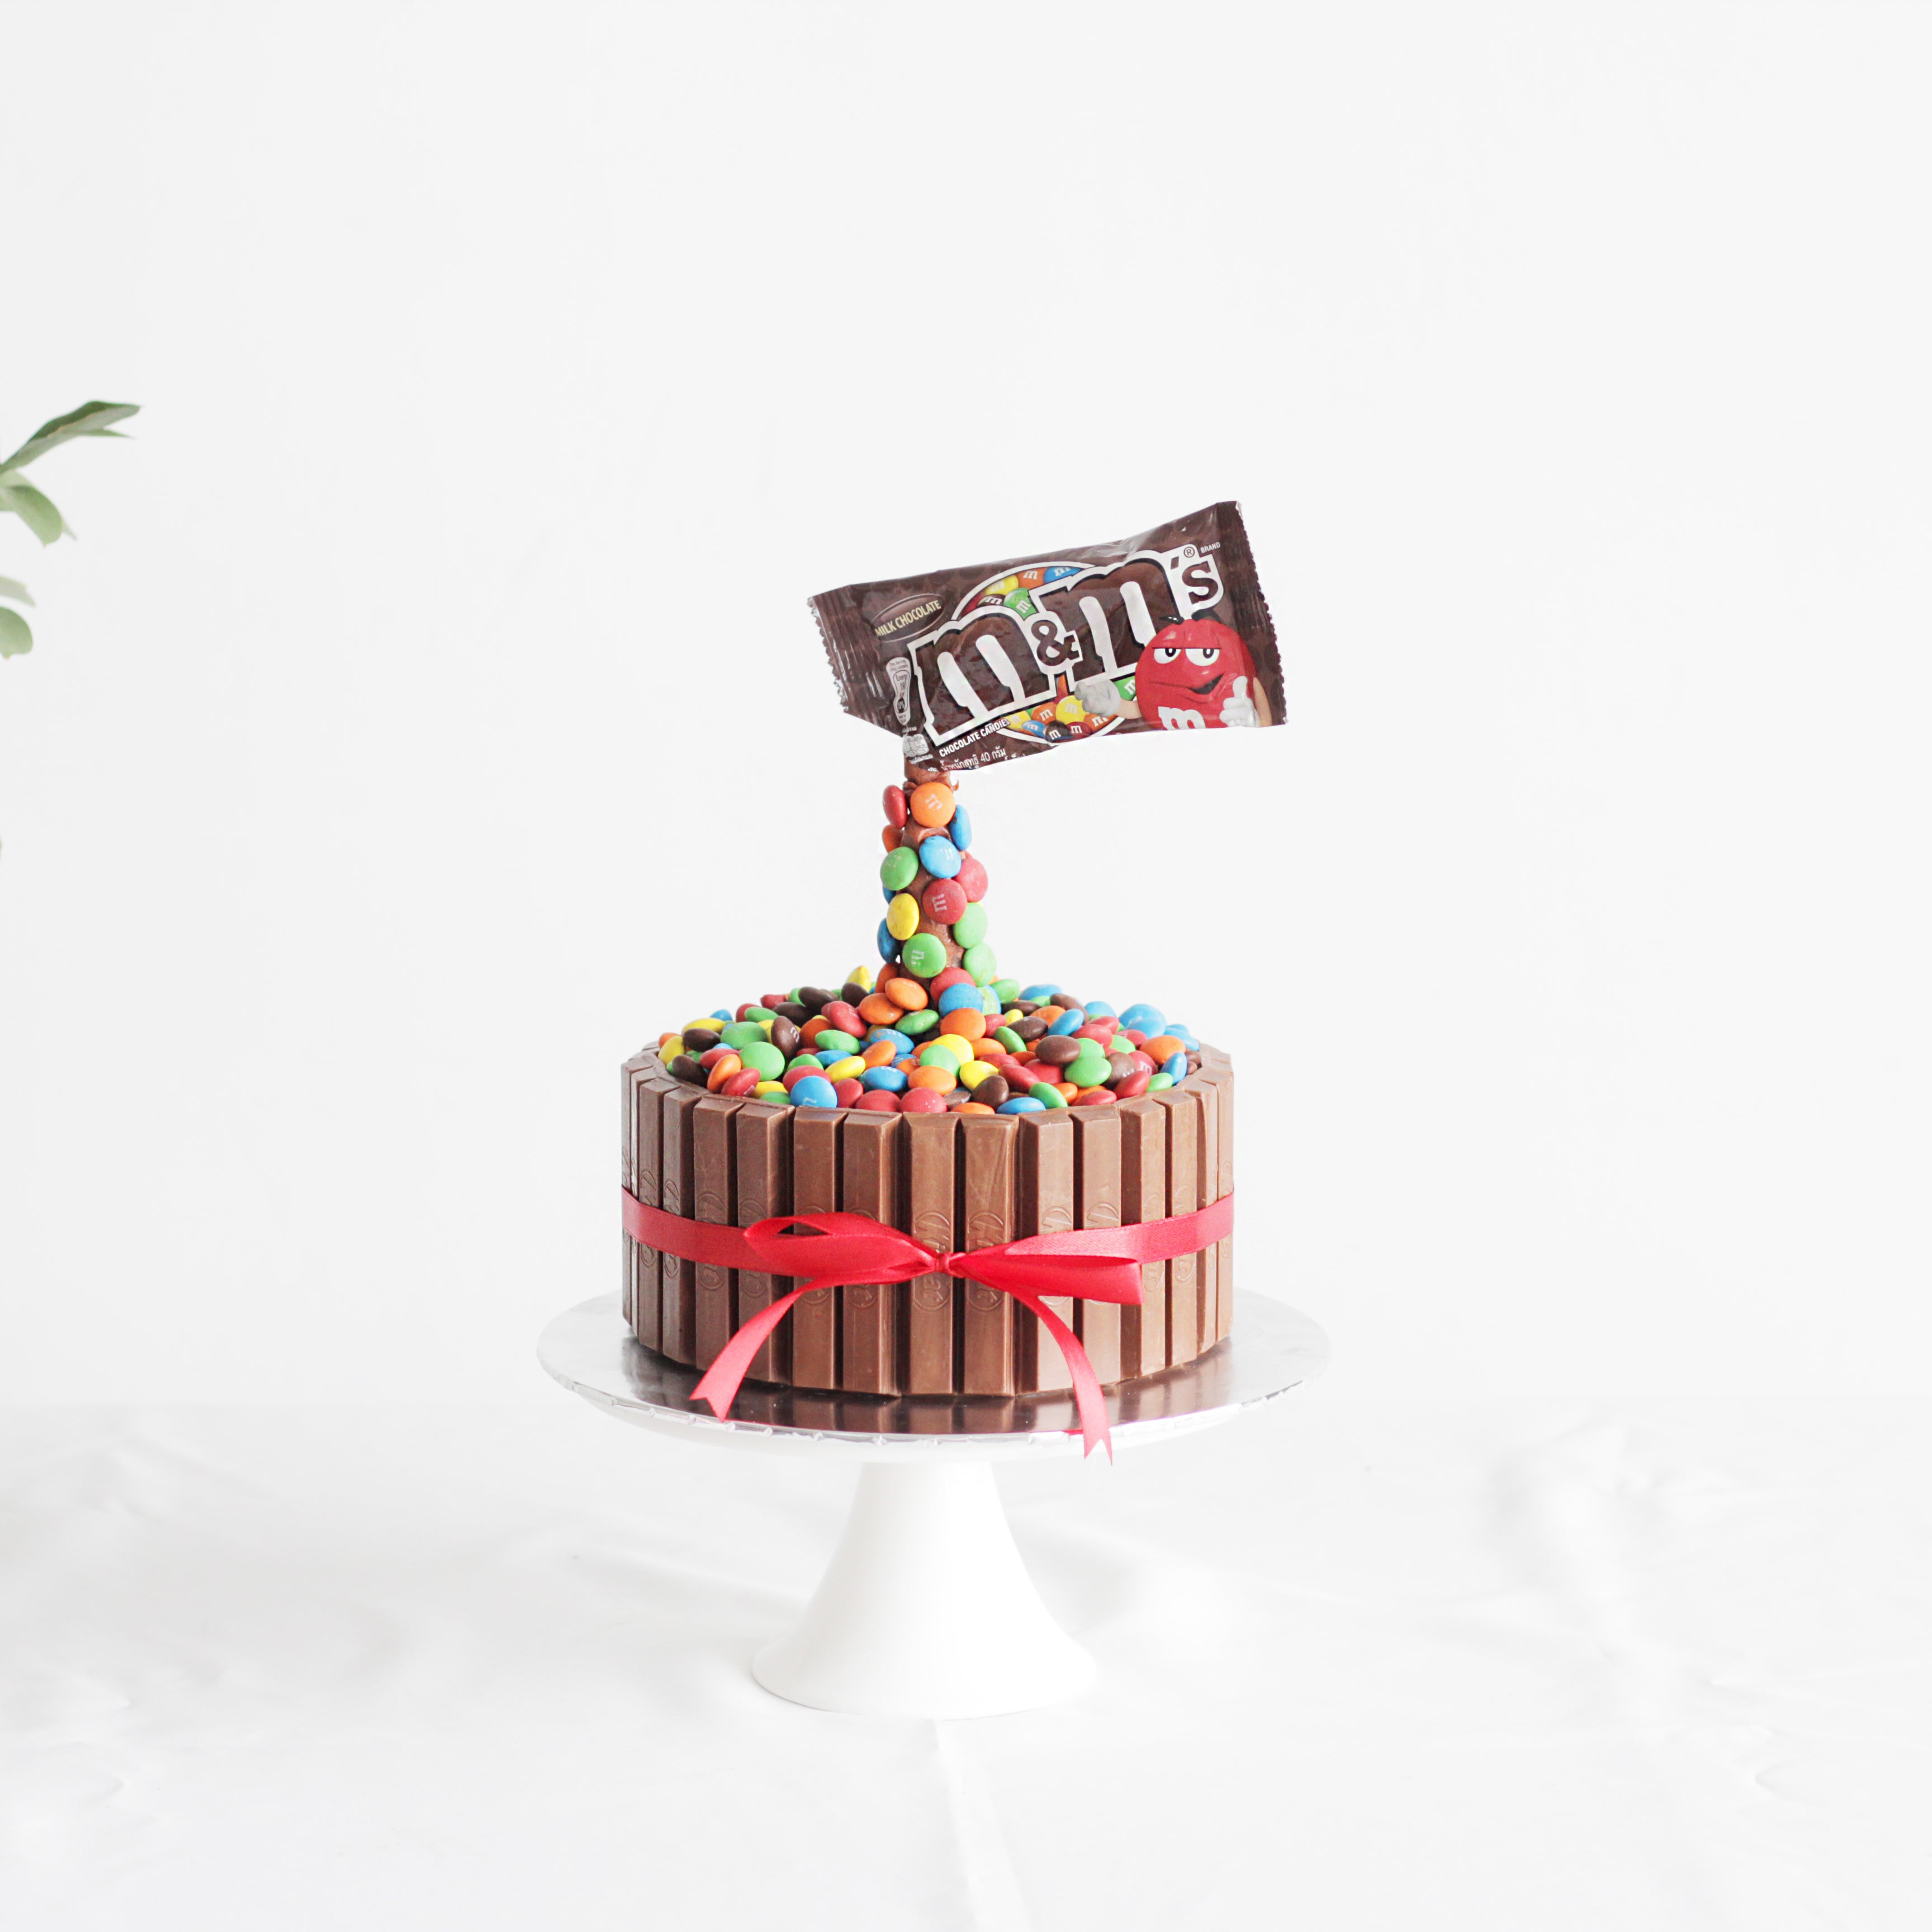 Gravity Defying Sweetie Cake Tutorial – The Gourmet Cake Company